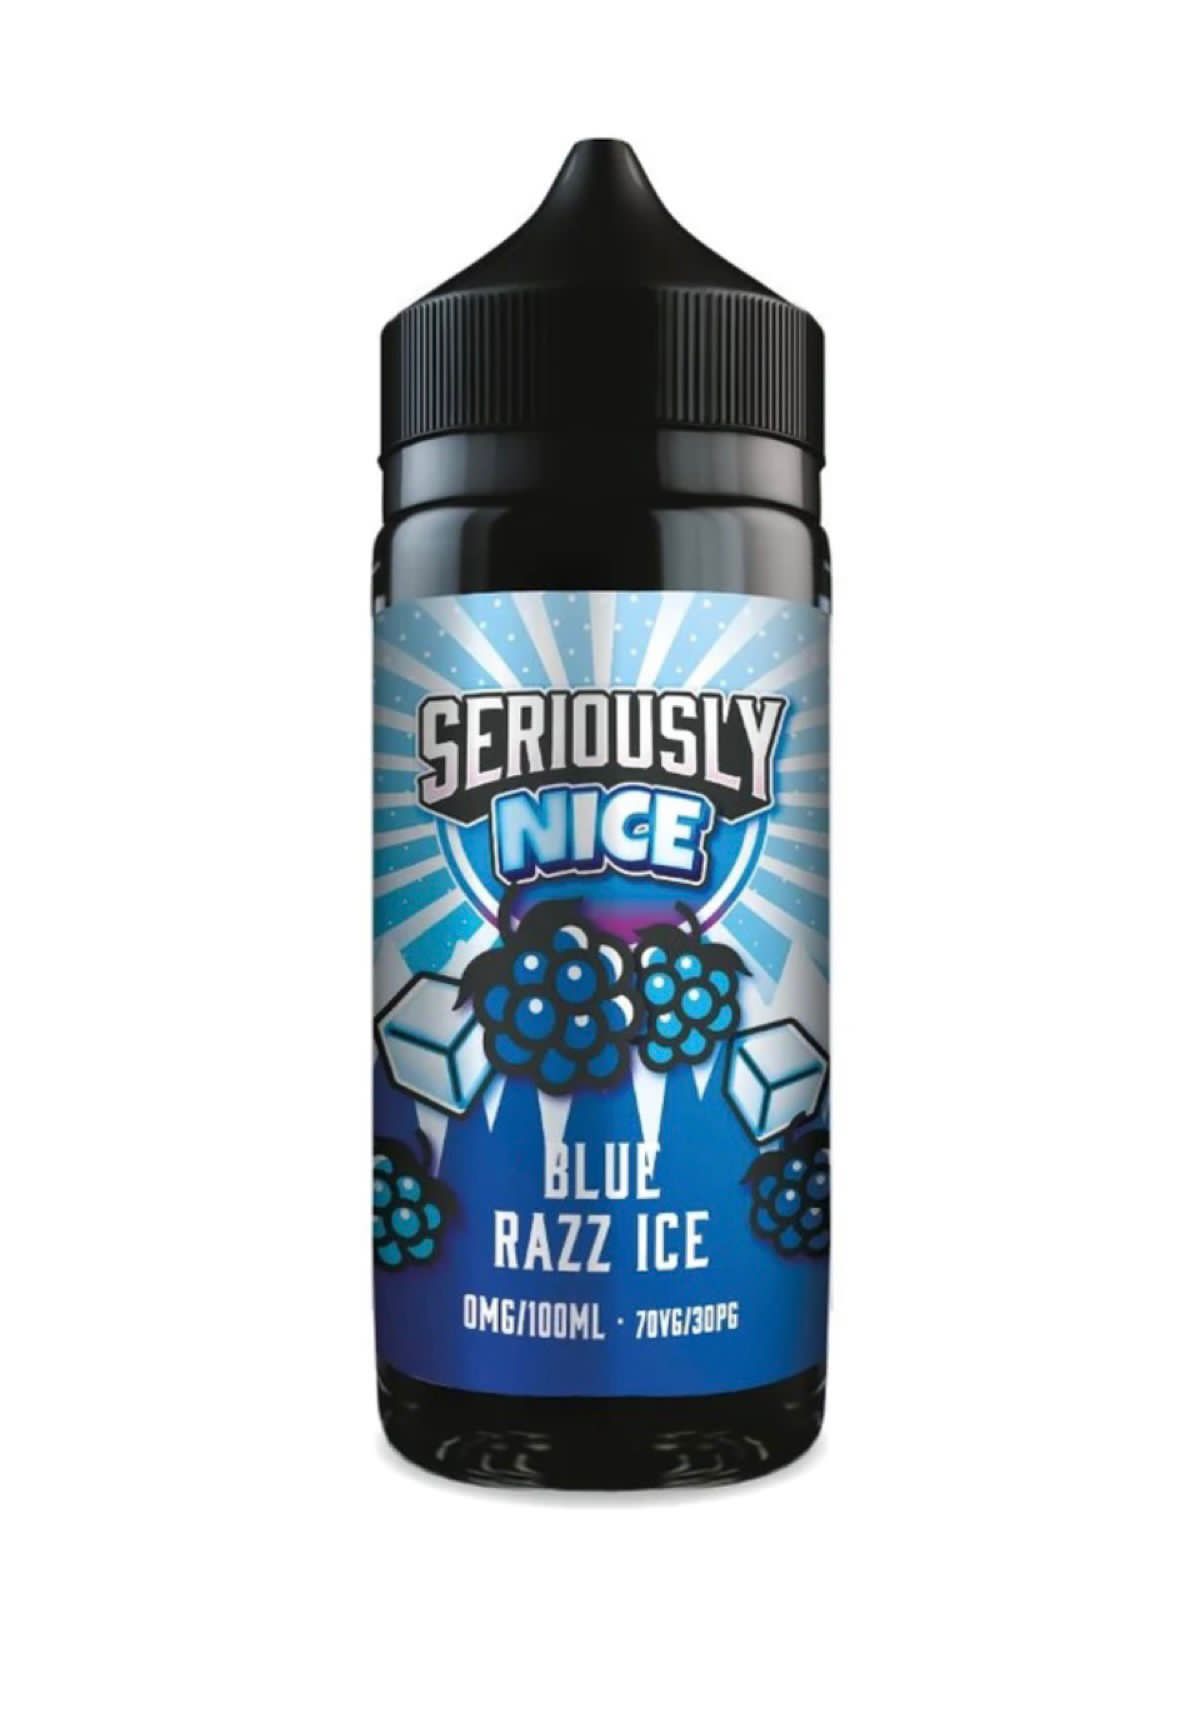 Blue Razz Ice Seriously Nice 100ml Shortfill